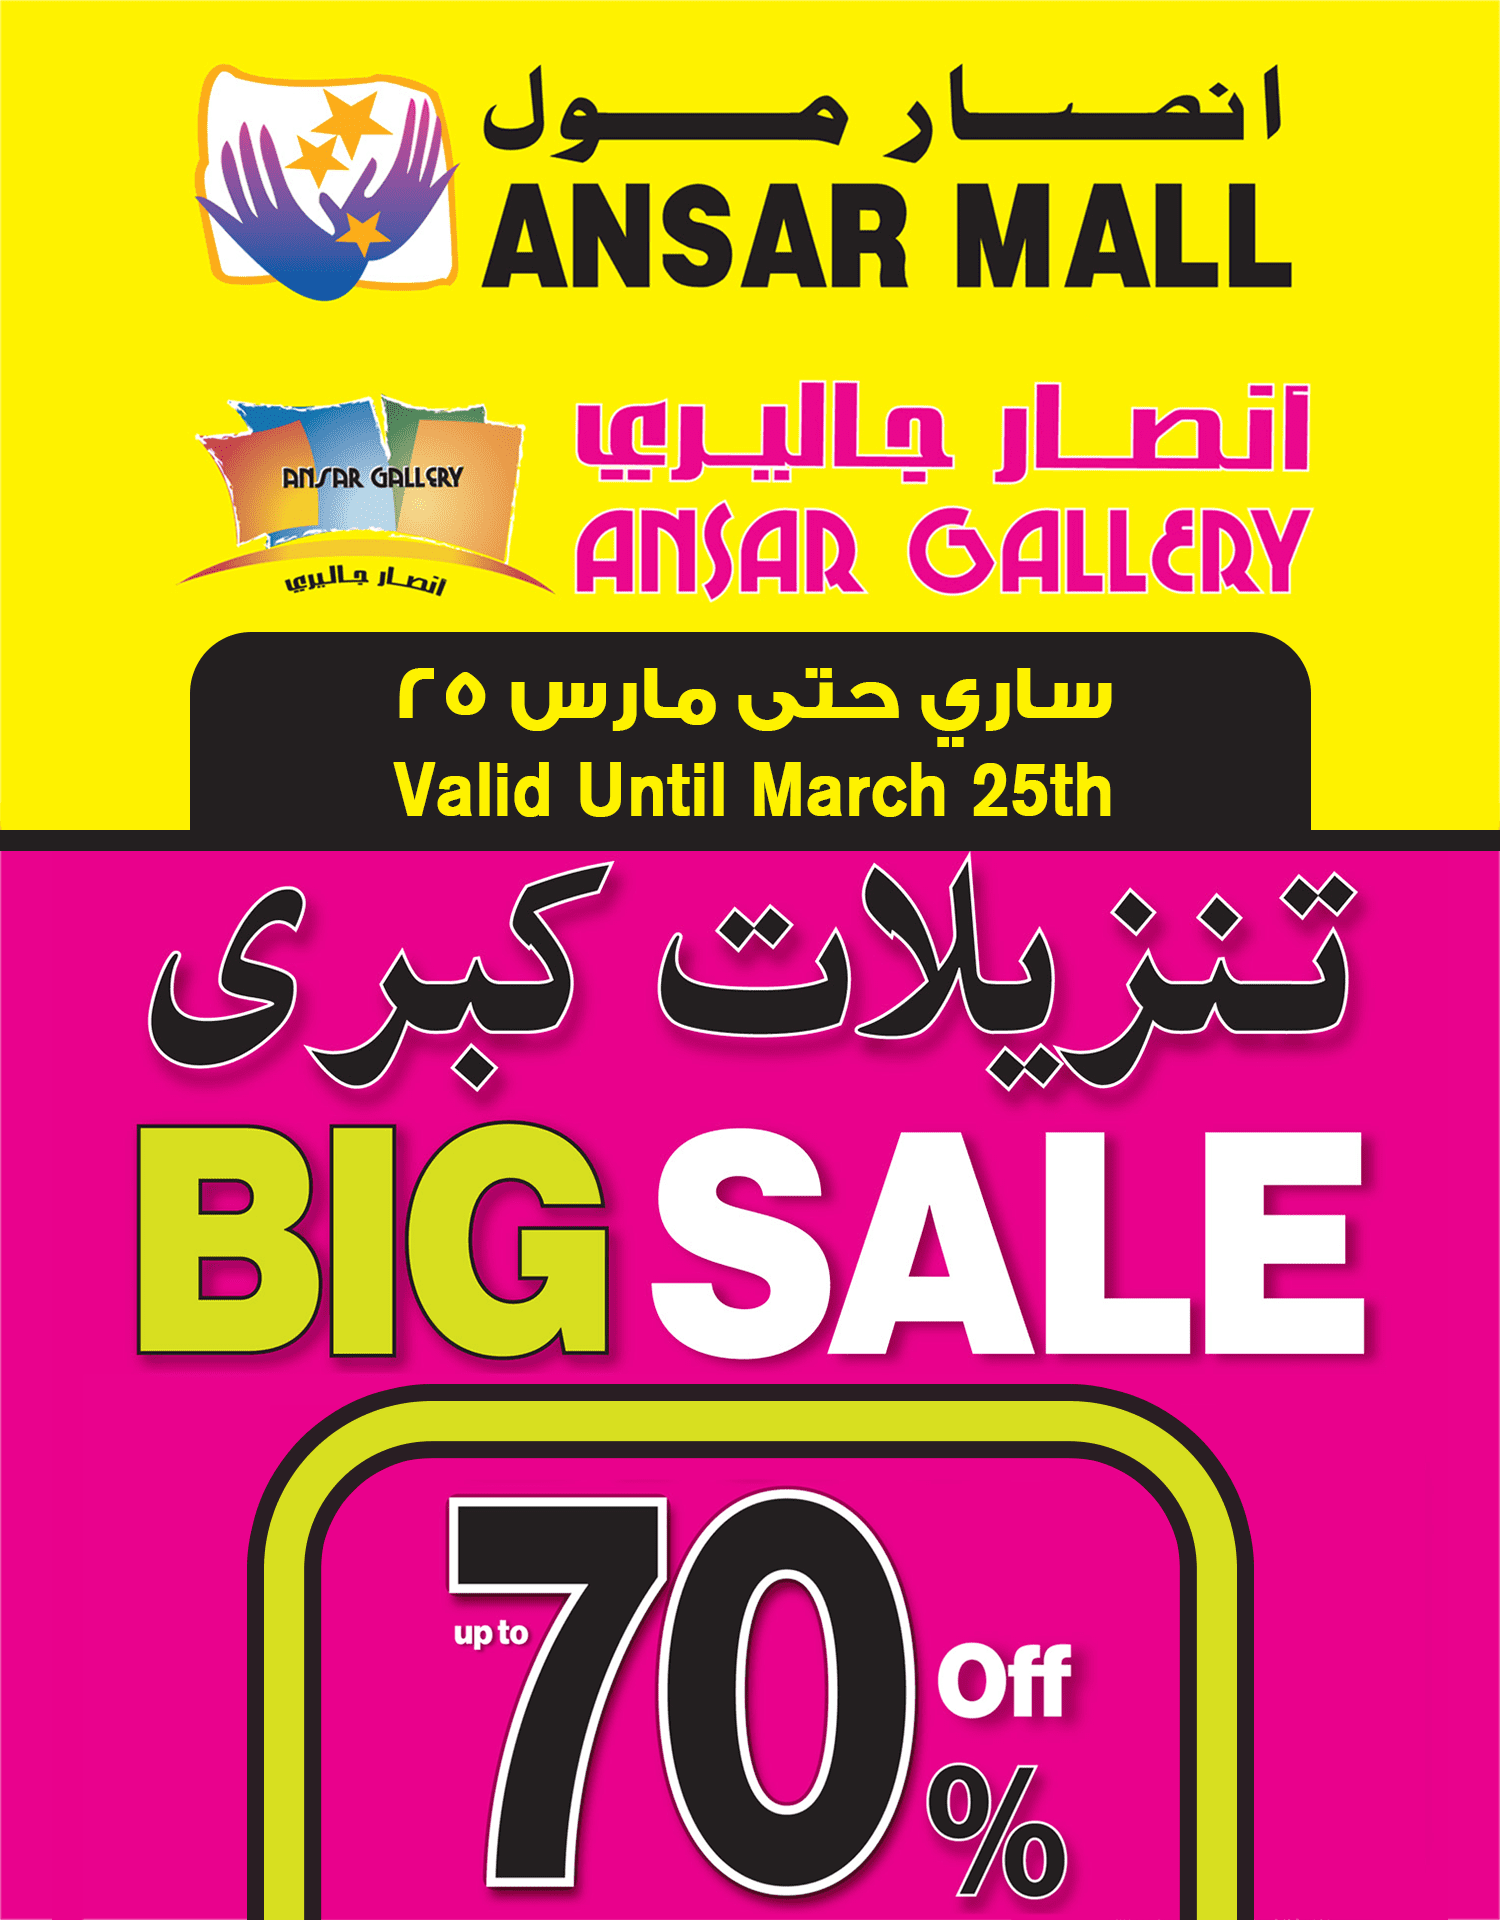 Ansar Mall BIG SALE up to 70%